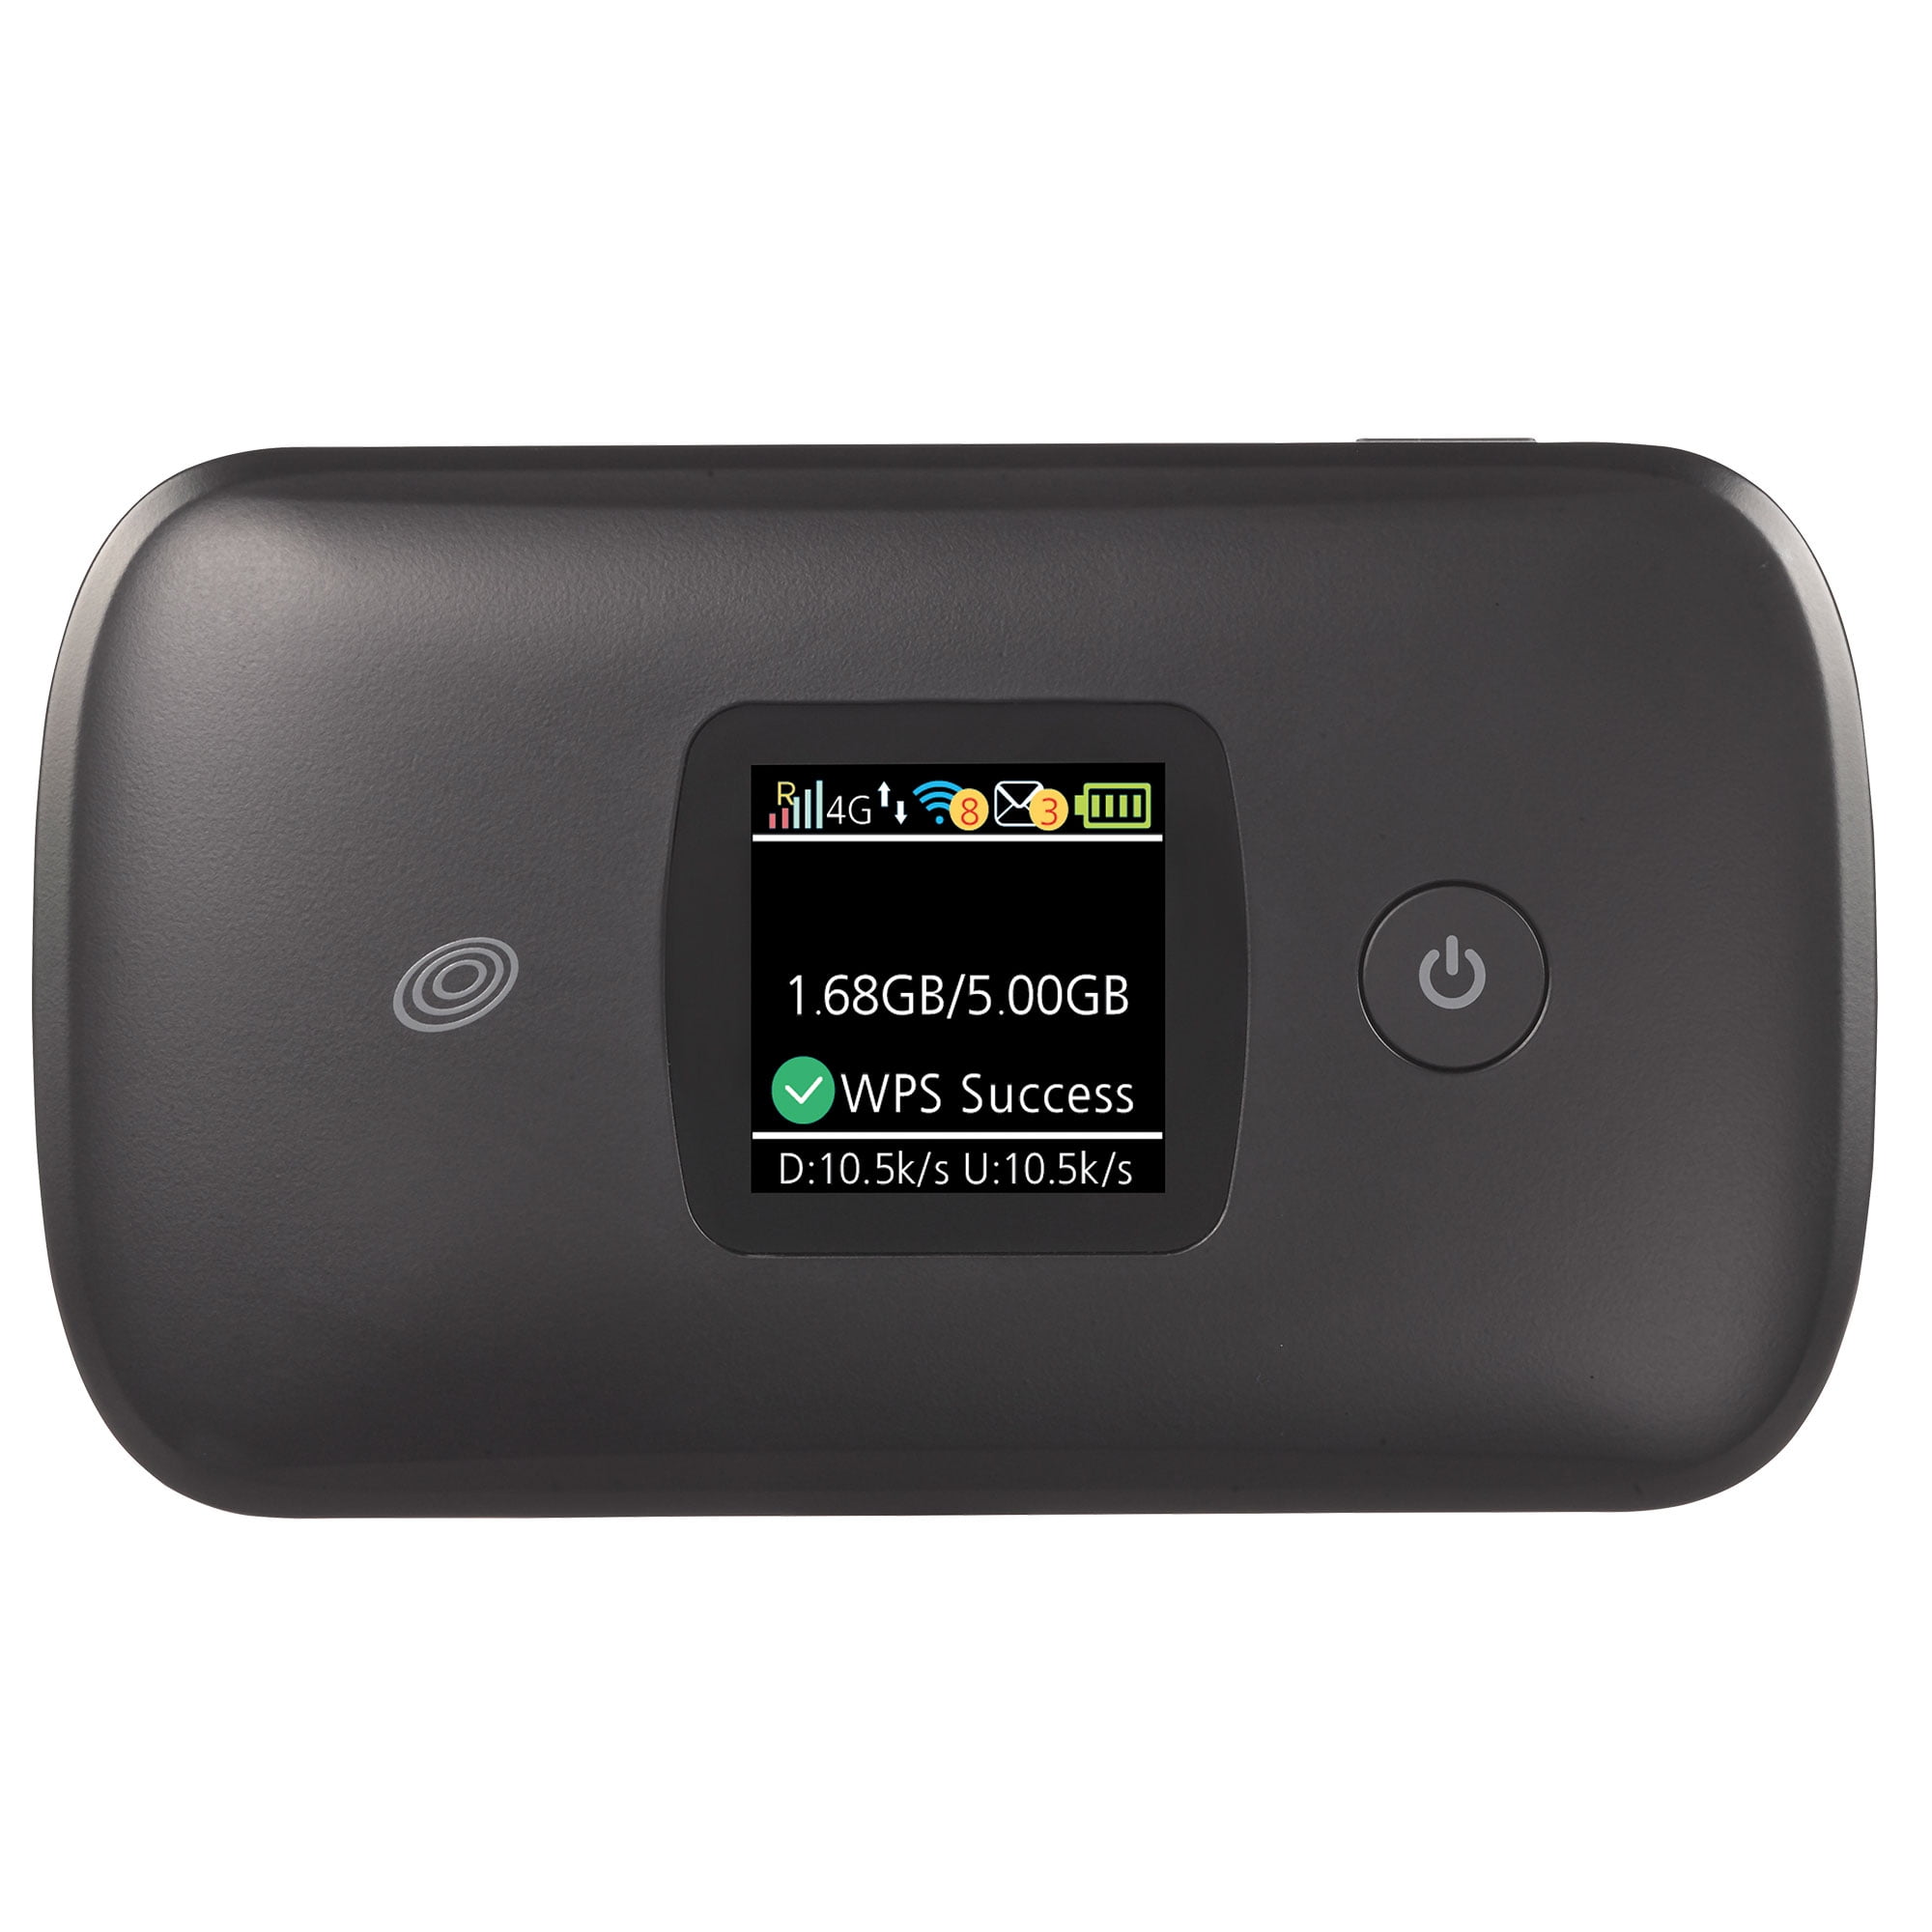 Verizon FiOS G3100 - Wireless router - 4-port switch - GigE, 802.11ax, MoCA  2.5 - WAN ports: 2 - 802.11a/b/g/n/ac/ax - Tri-Band 